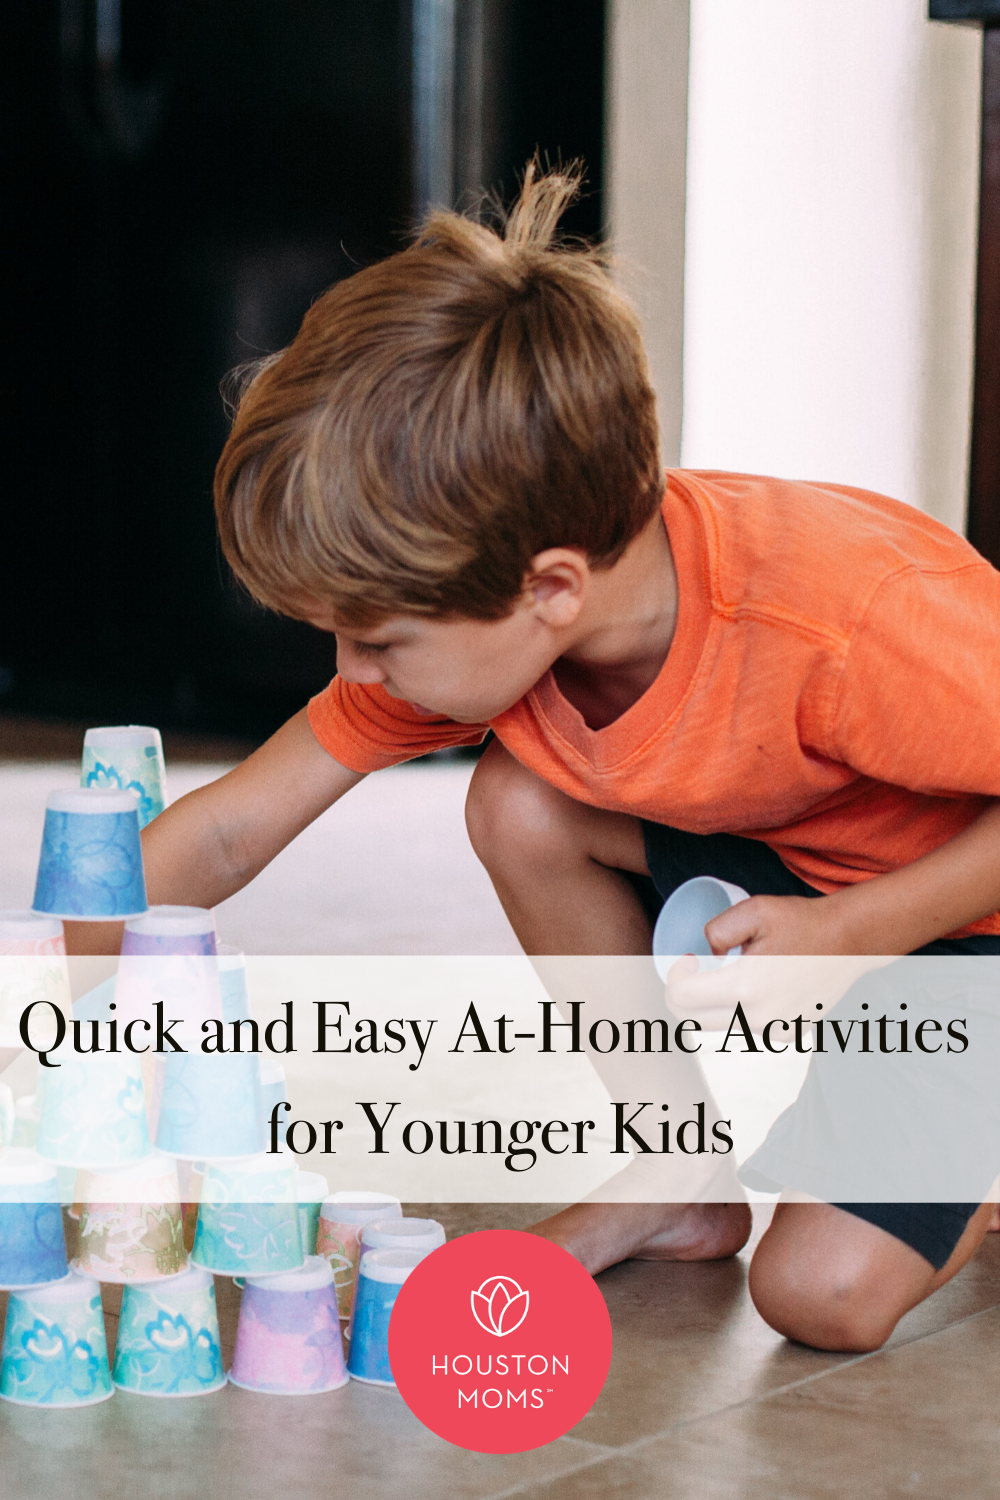 Houston Moms "Quick and Easy At-Home Activities for Younger Kids" #houstonmomsblog #houstonmoms #momsaroundhouston